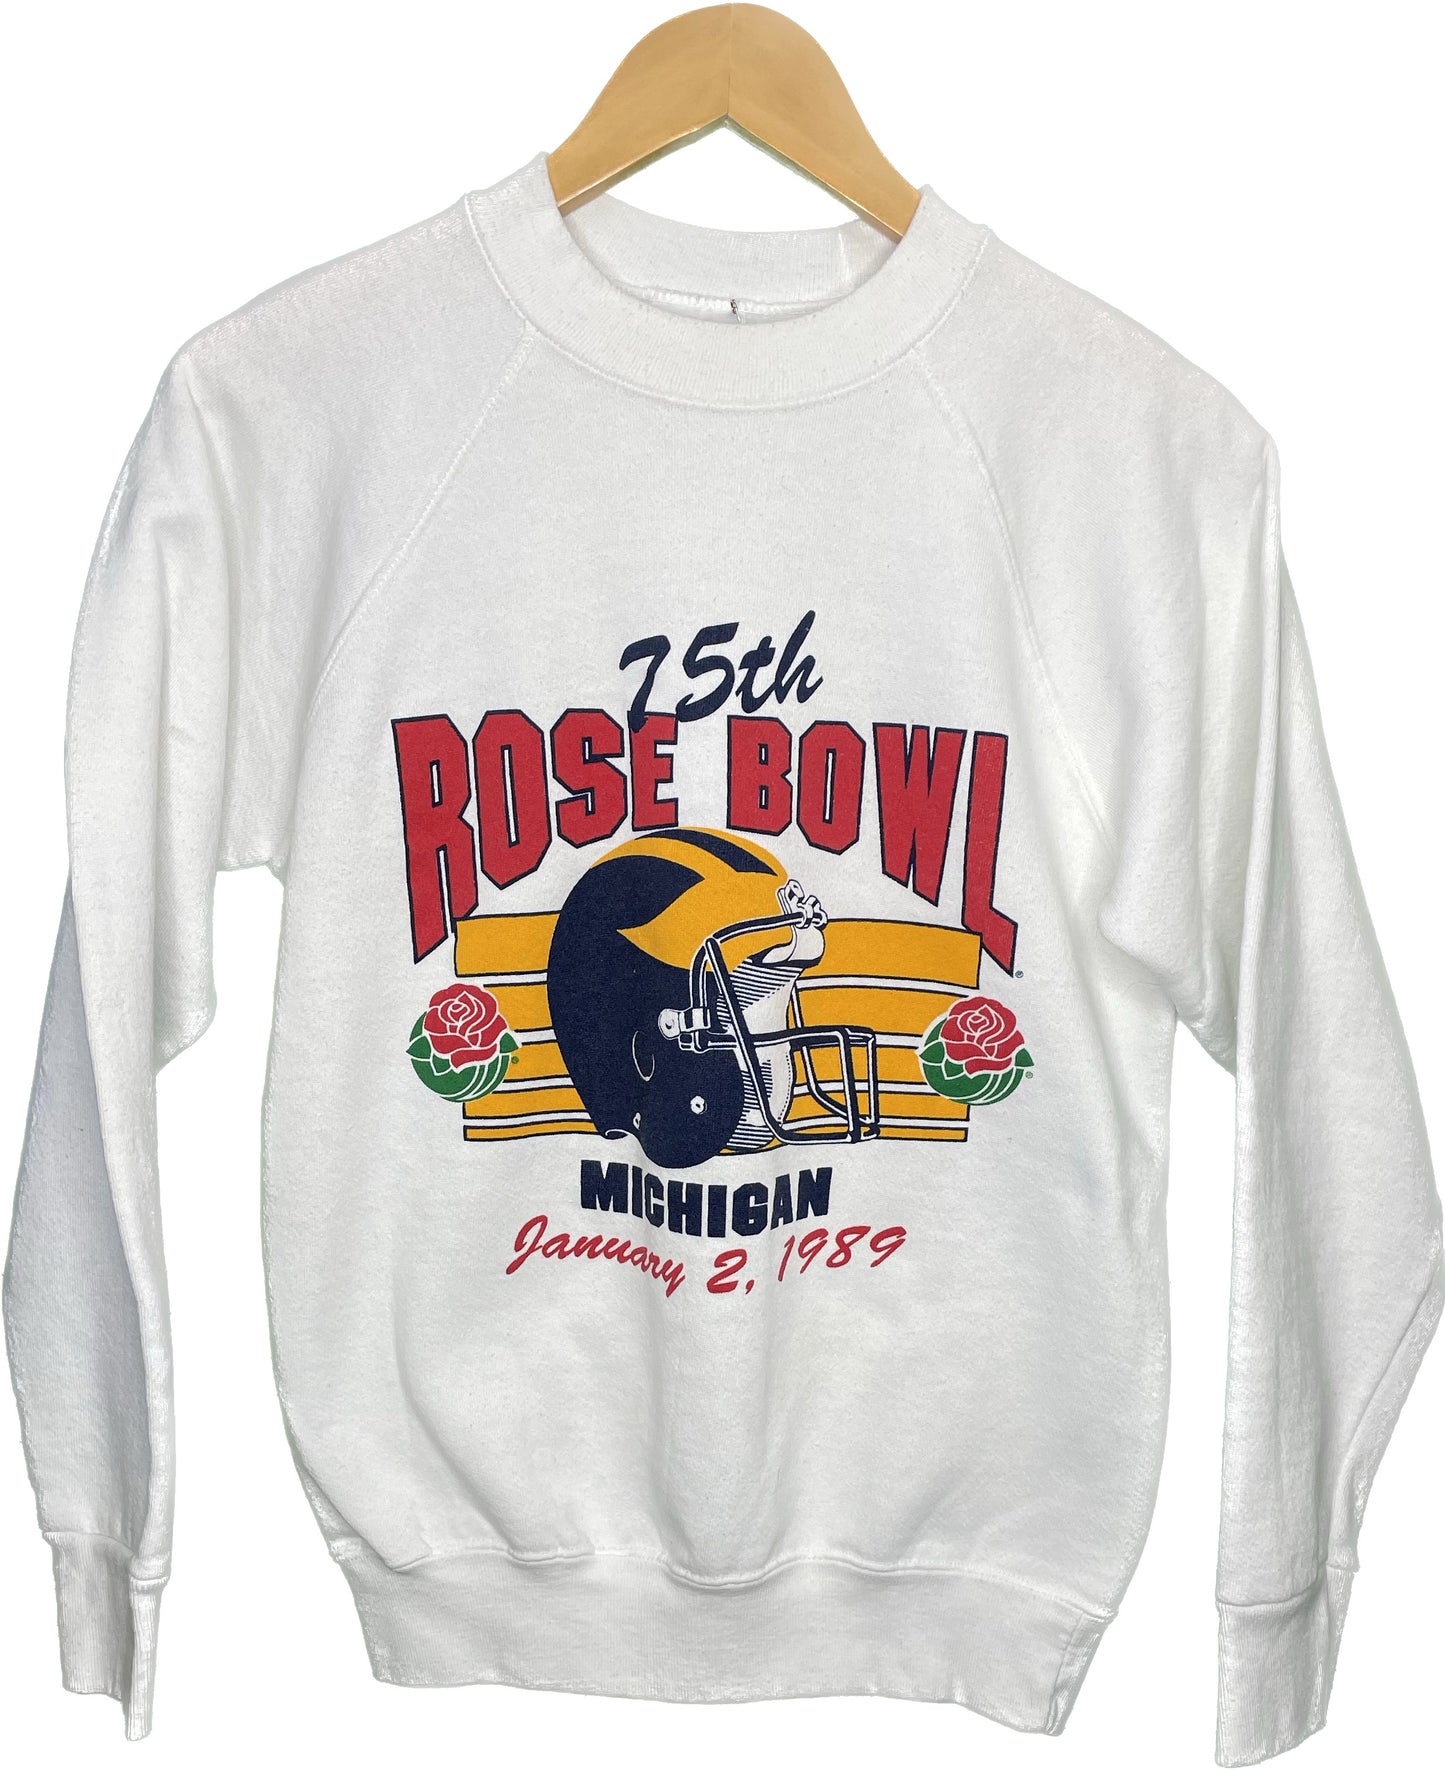 Vintage S 75th Rose Bowl Michigan College Sweatshirt